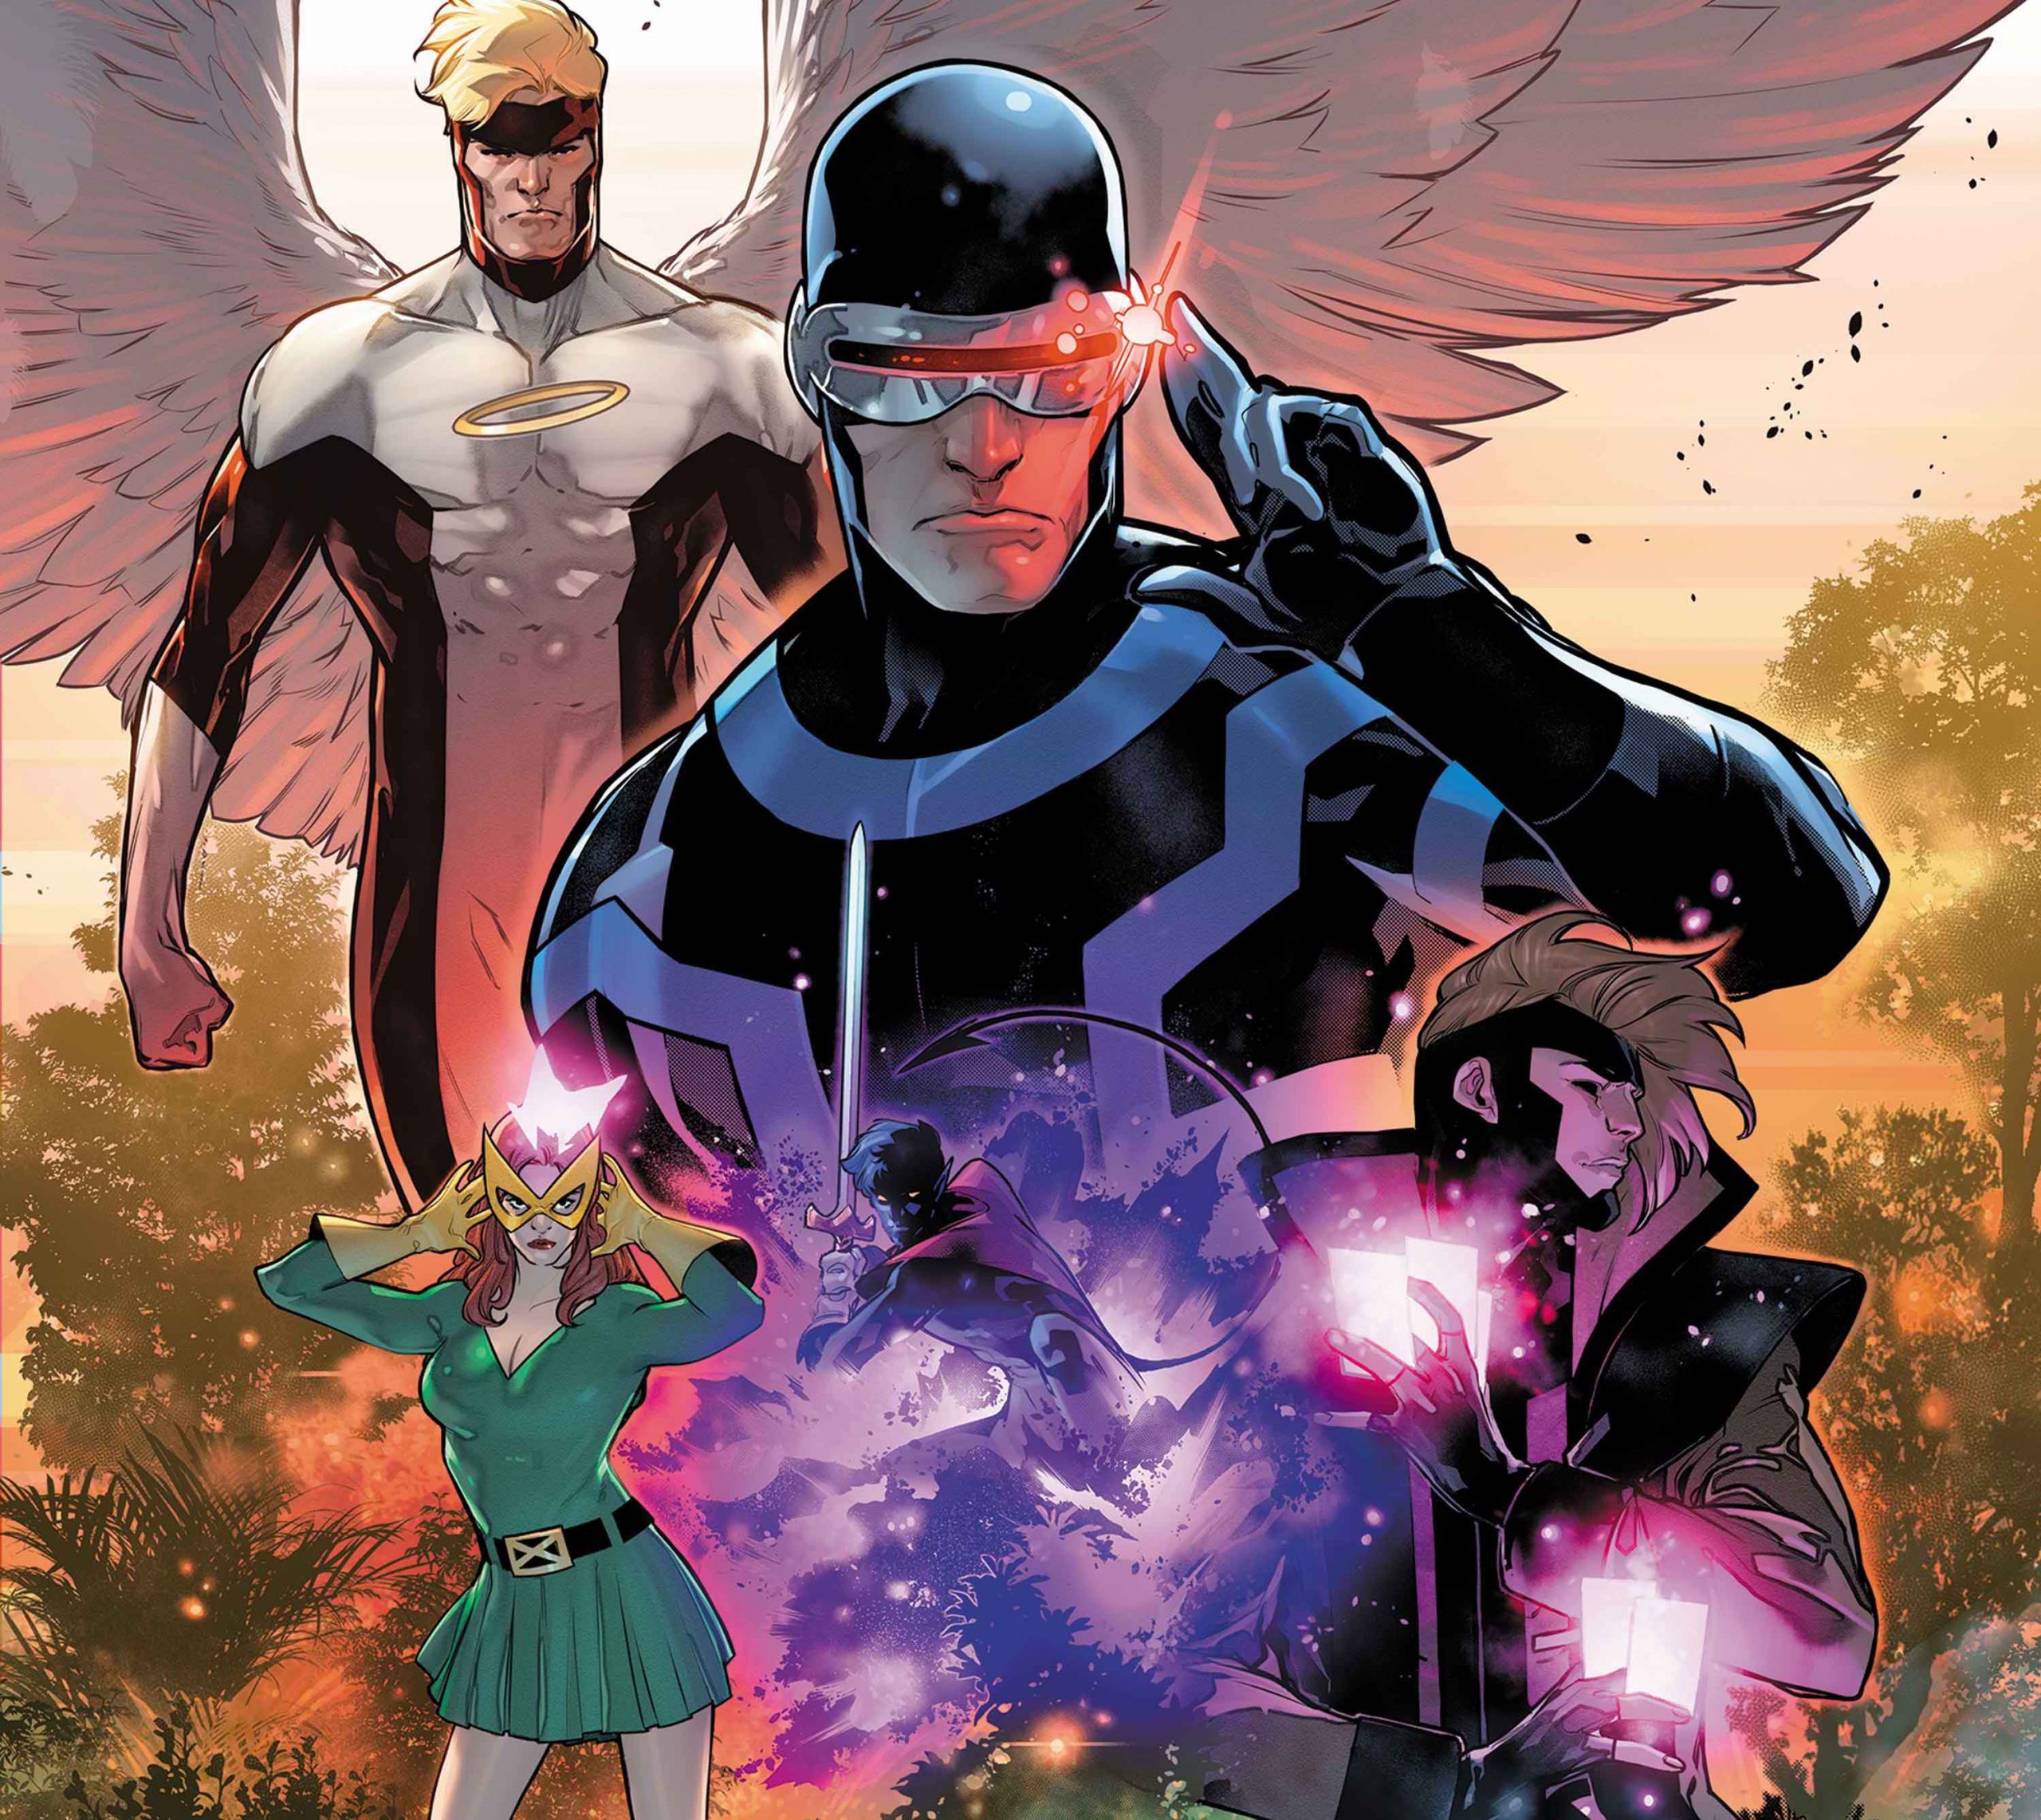 Marvel Comics teases 'Children of the Atom' a new X-Men series!